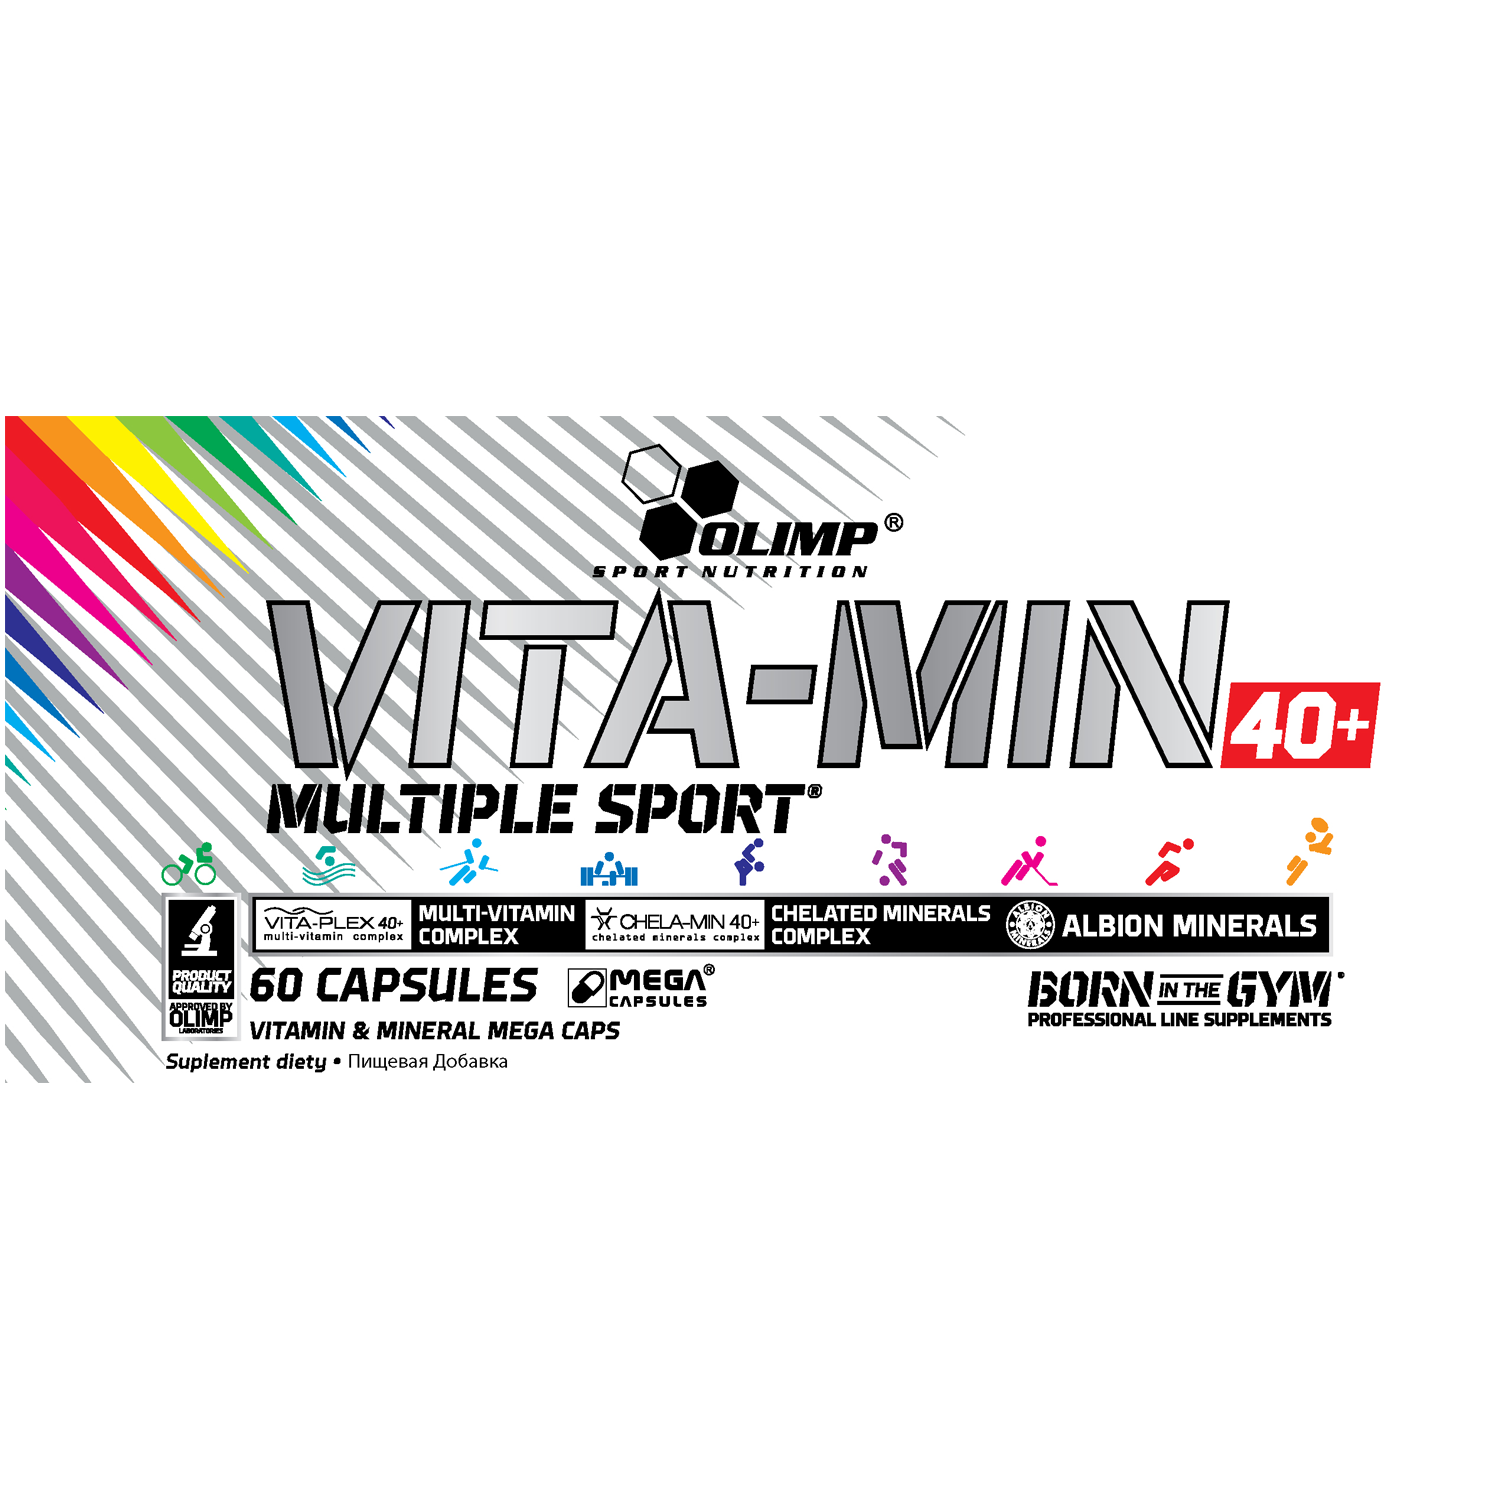 Olimp Vita-Min Multiple Sport БАД 40+, 60 капсул/1 упаковка